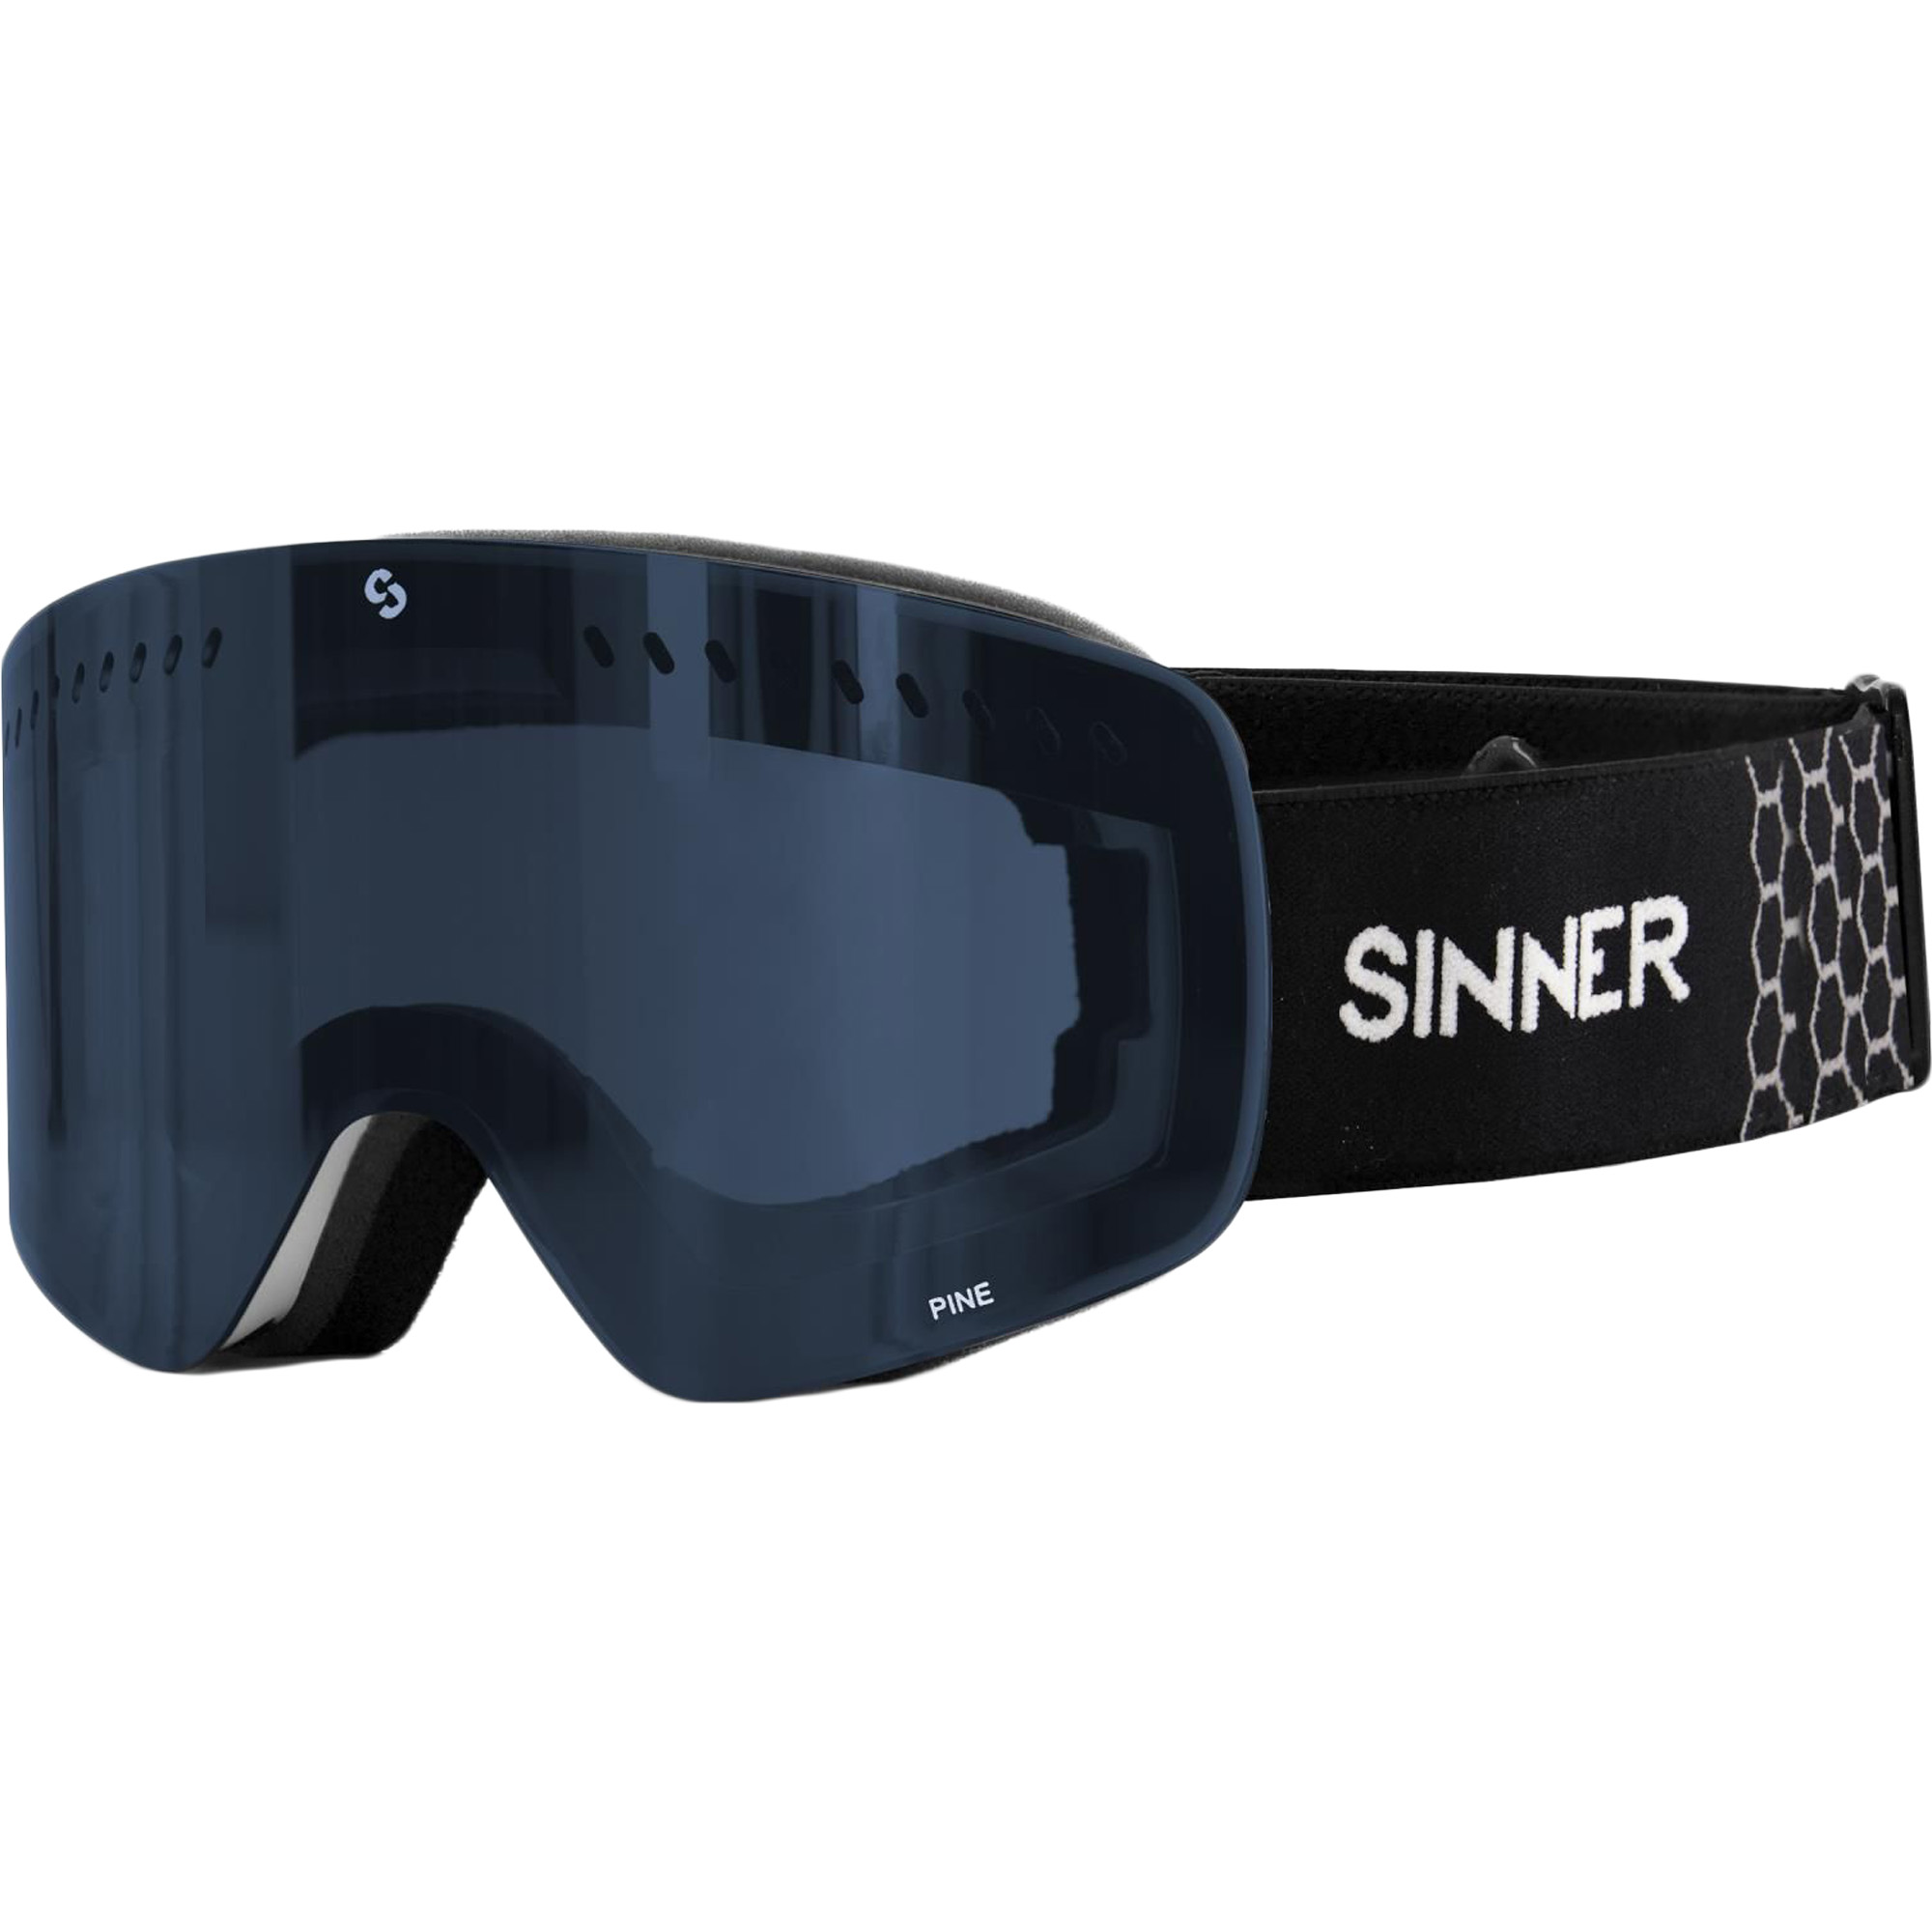 Photos - Ski Goggles Sinner Men's Pine Ski/Snowboard Goggles, L Matte Black/Blue Mirror SIGO-18 